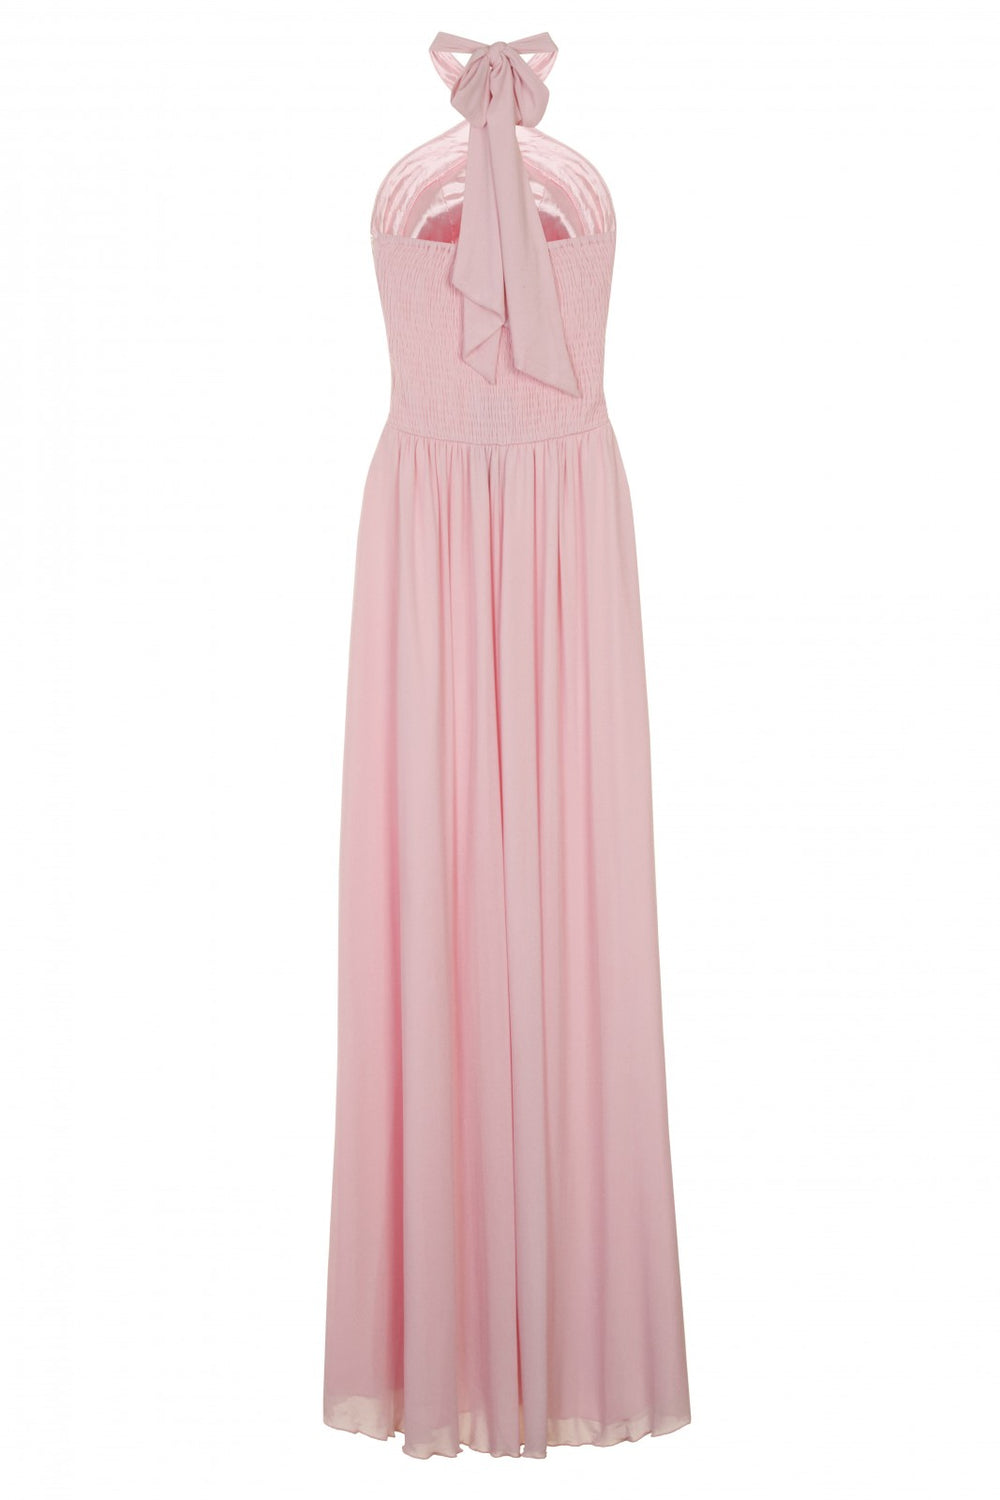 Cheryl Blush Pink Grecian Maxi Gown Dress